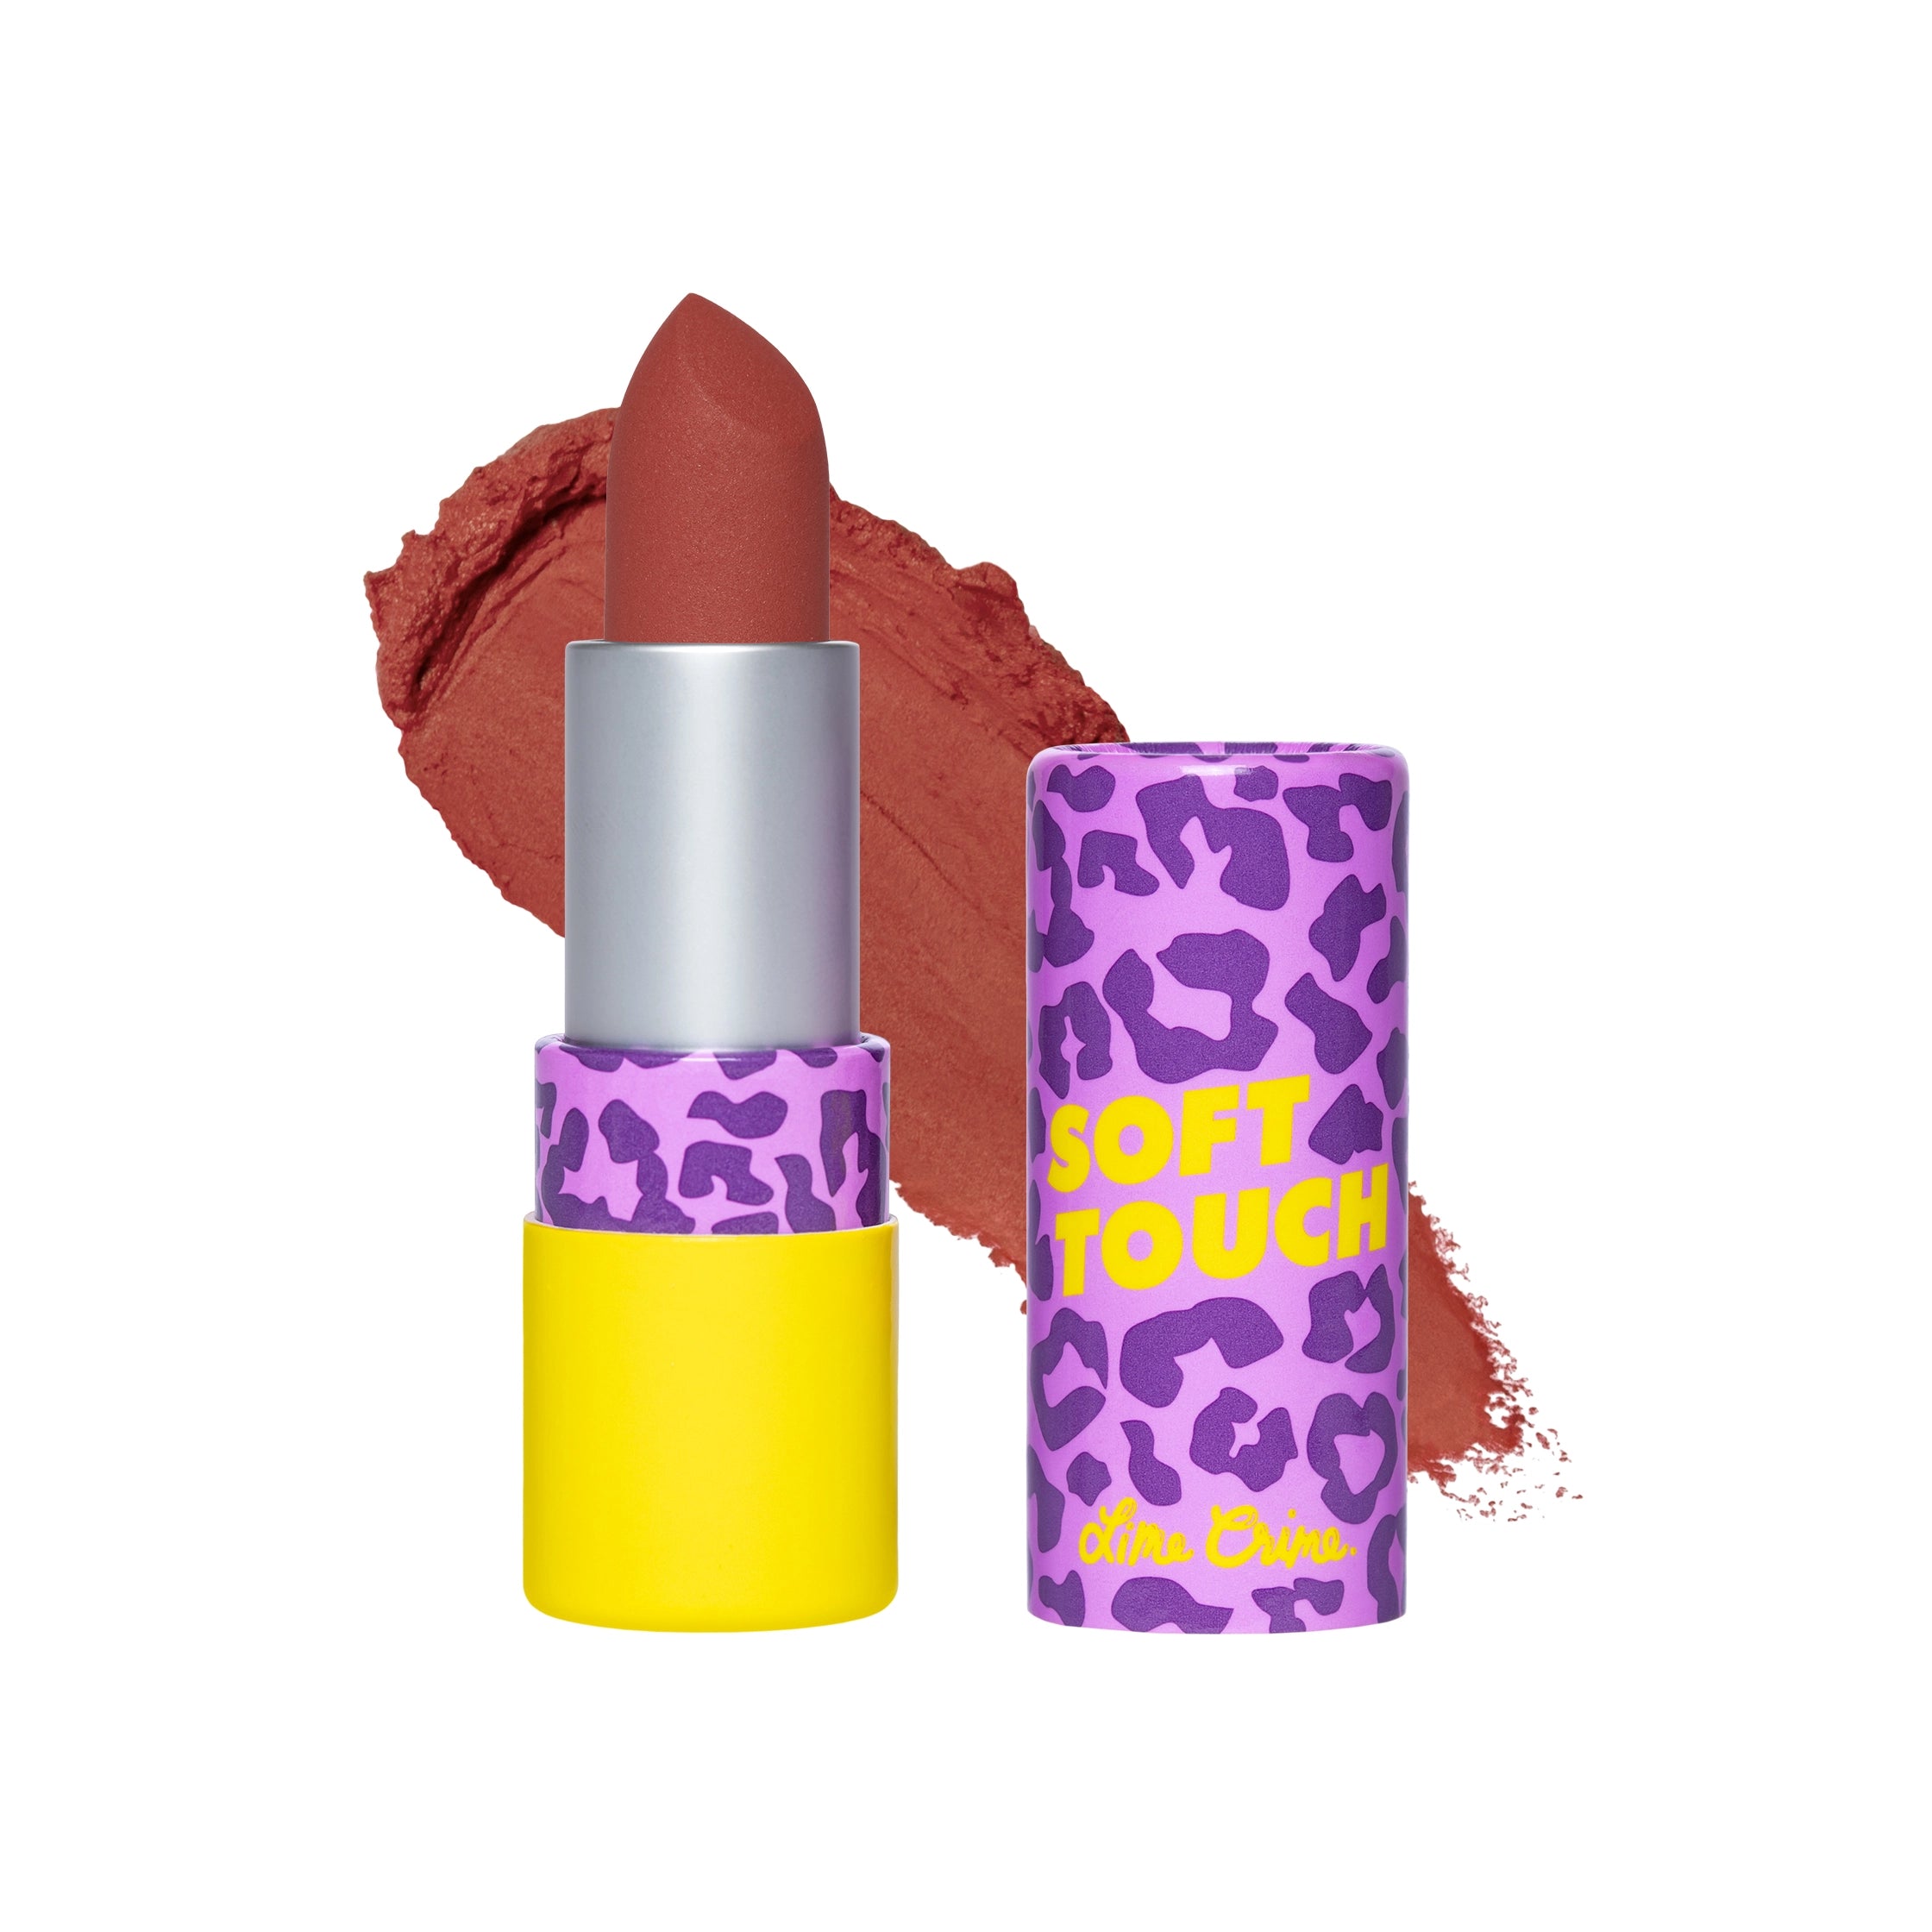 Soft Touch Lipstick variant:Vintage Spice